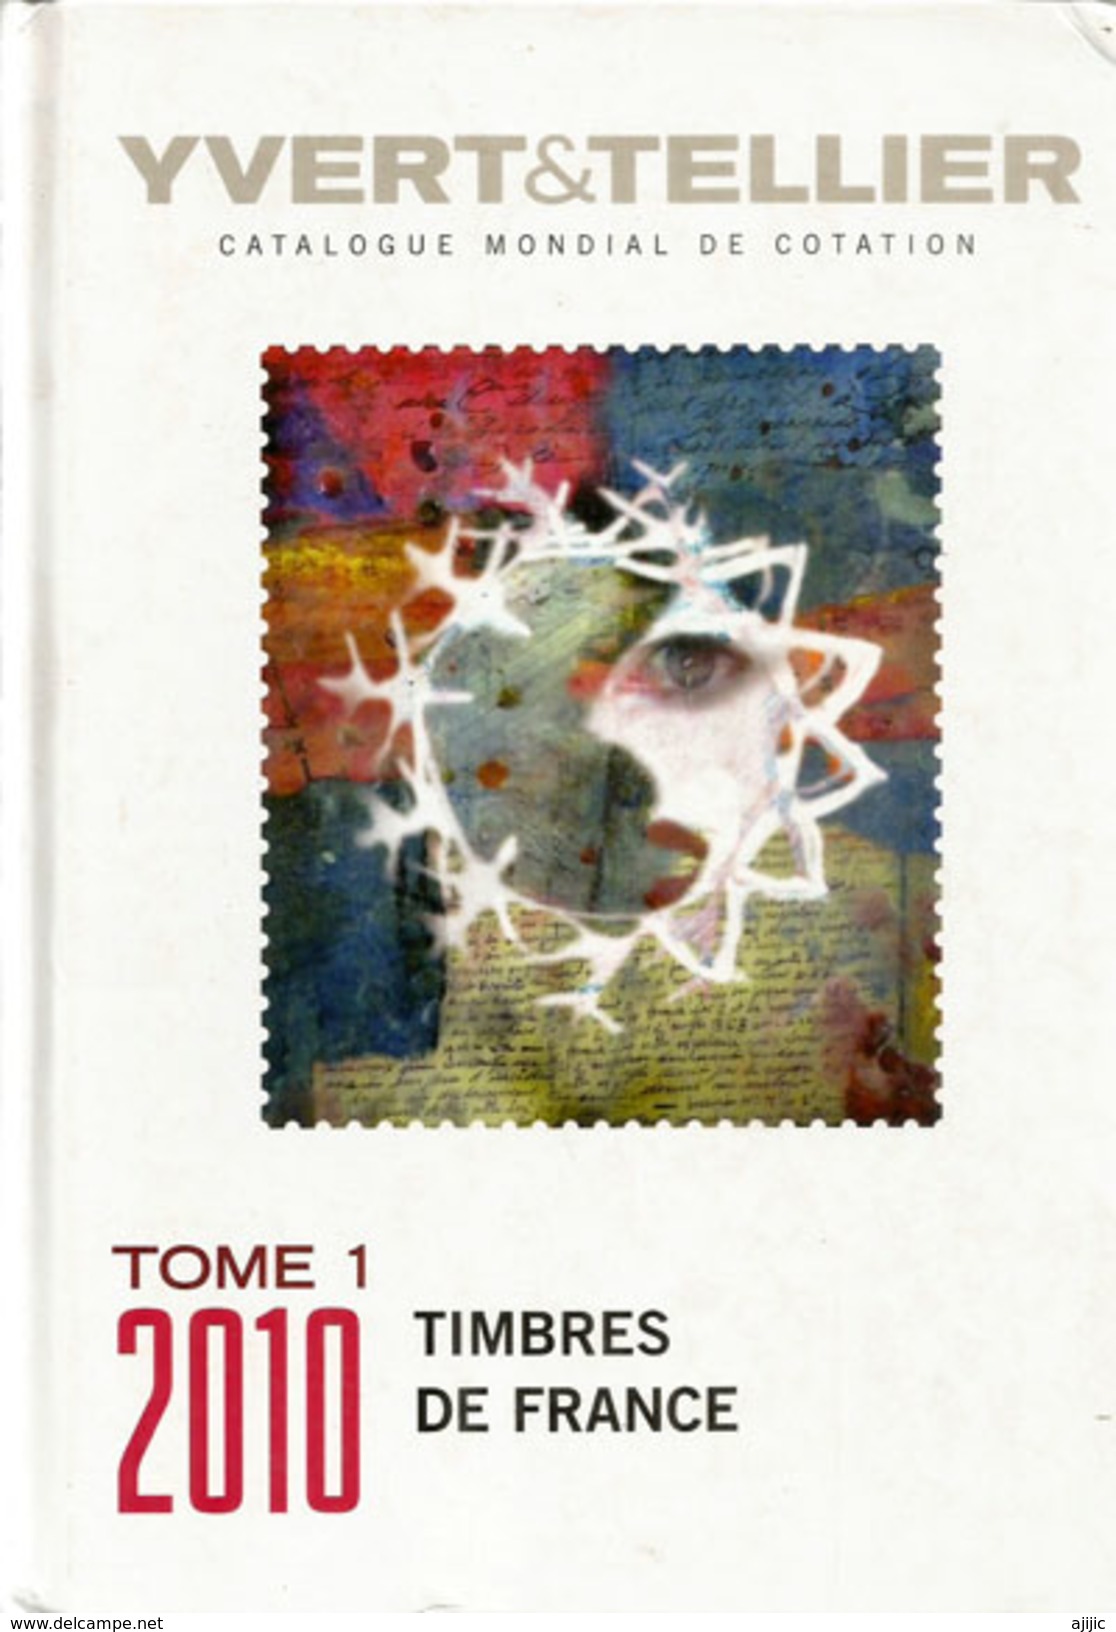 YVERT & TELLIER TOME 1 . 2010 Timbres De France. 880 Pages Couleurs, état Neuf - Francia